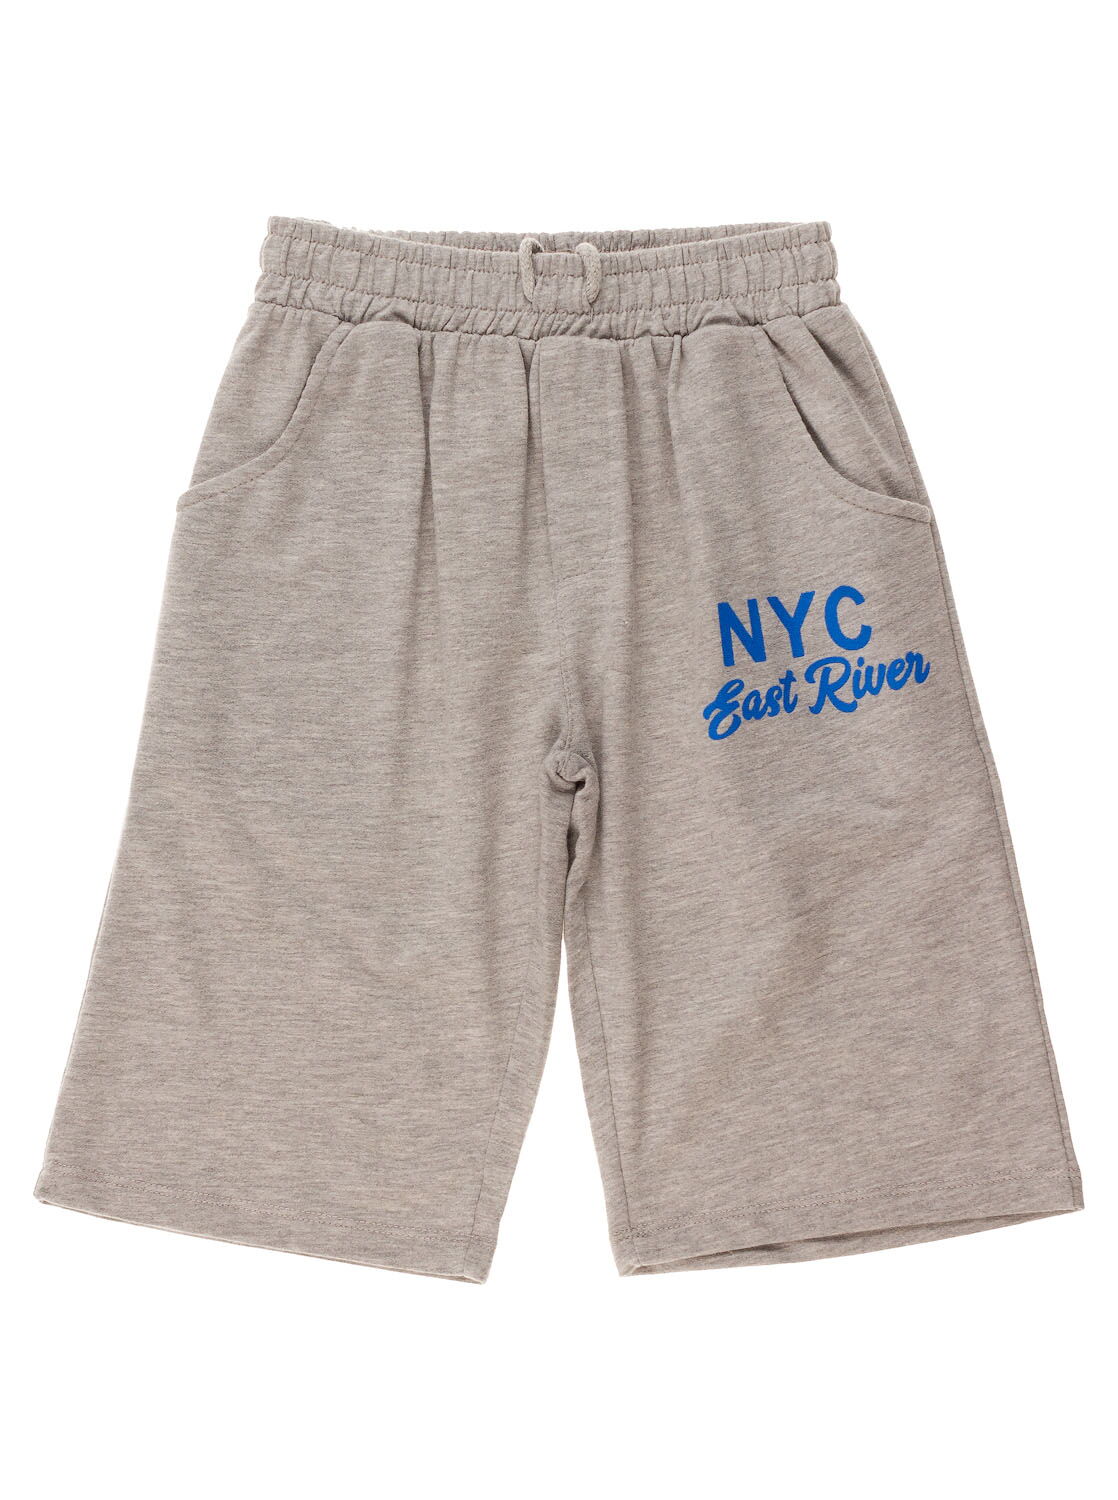 Комплект футболка и шорты Breeze NYC синий 12423 - фото